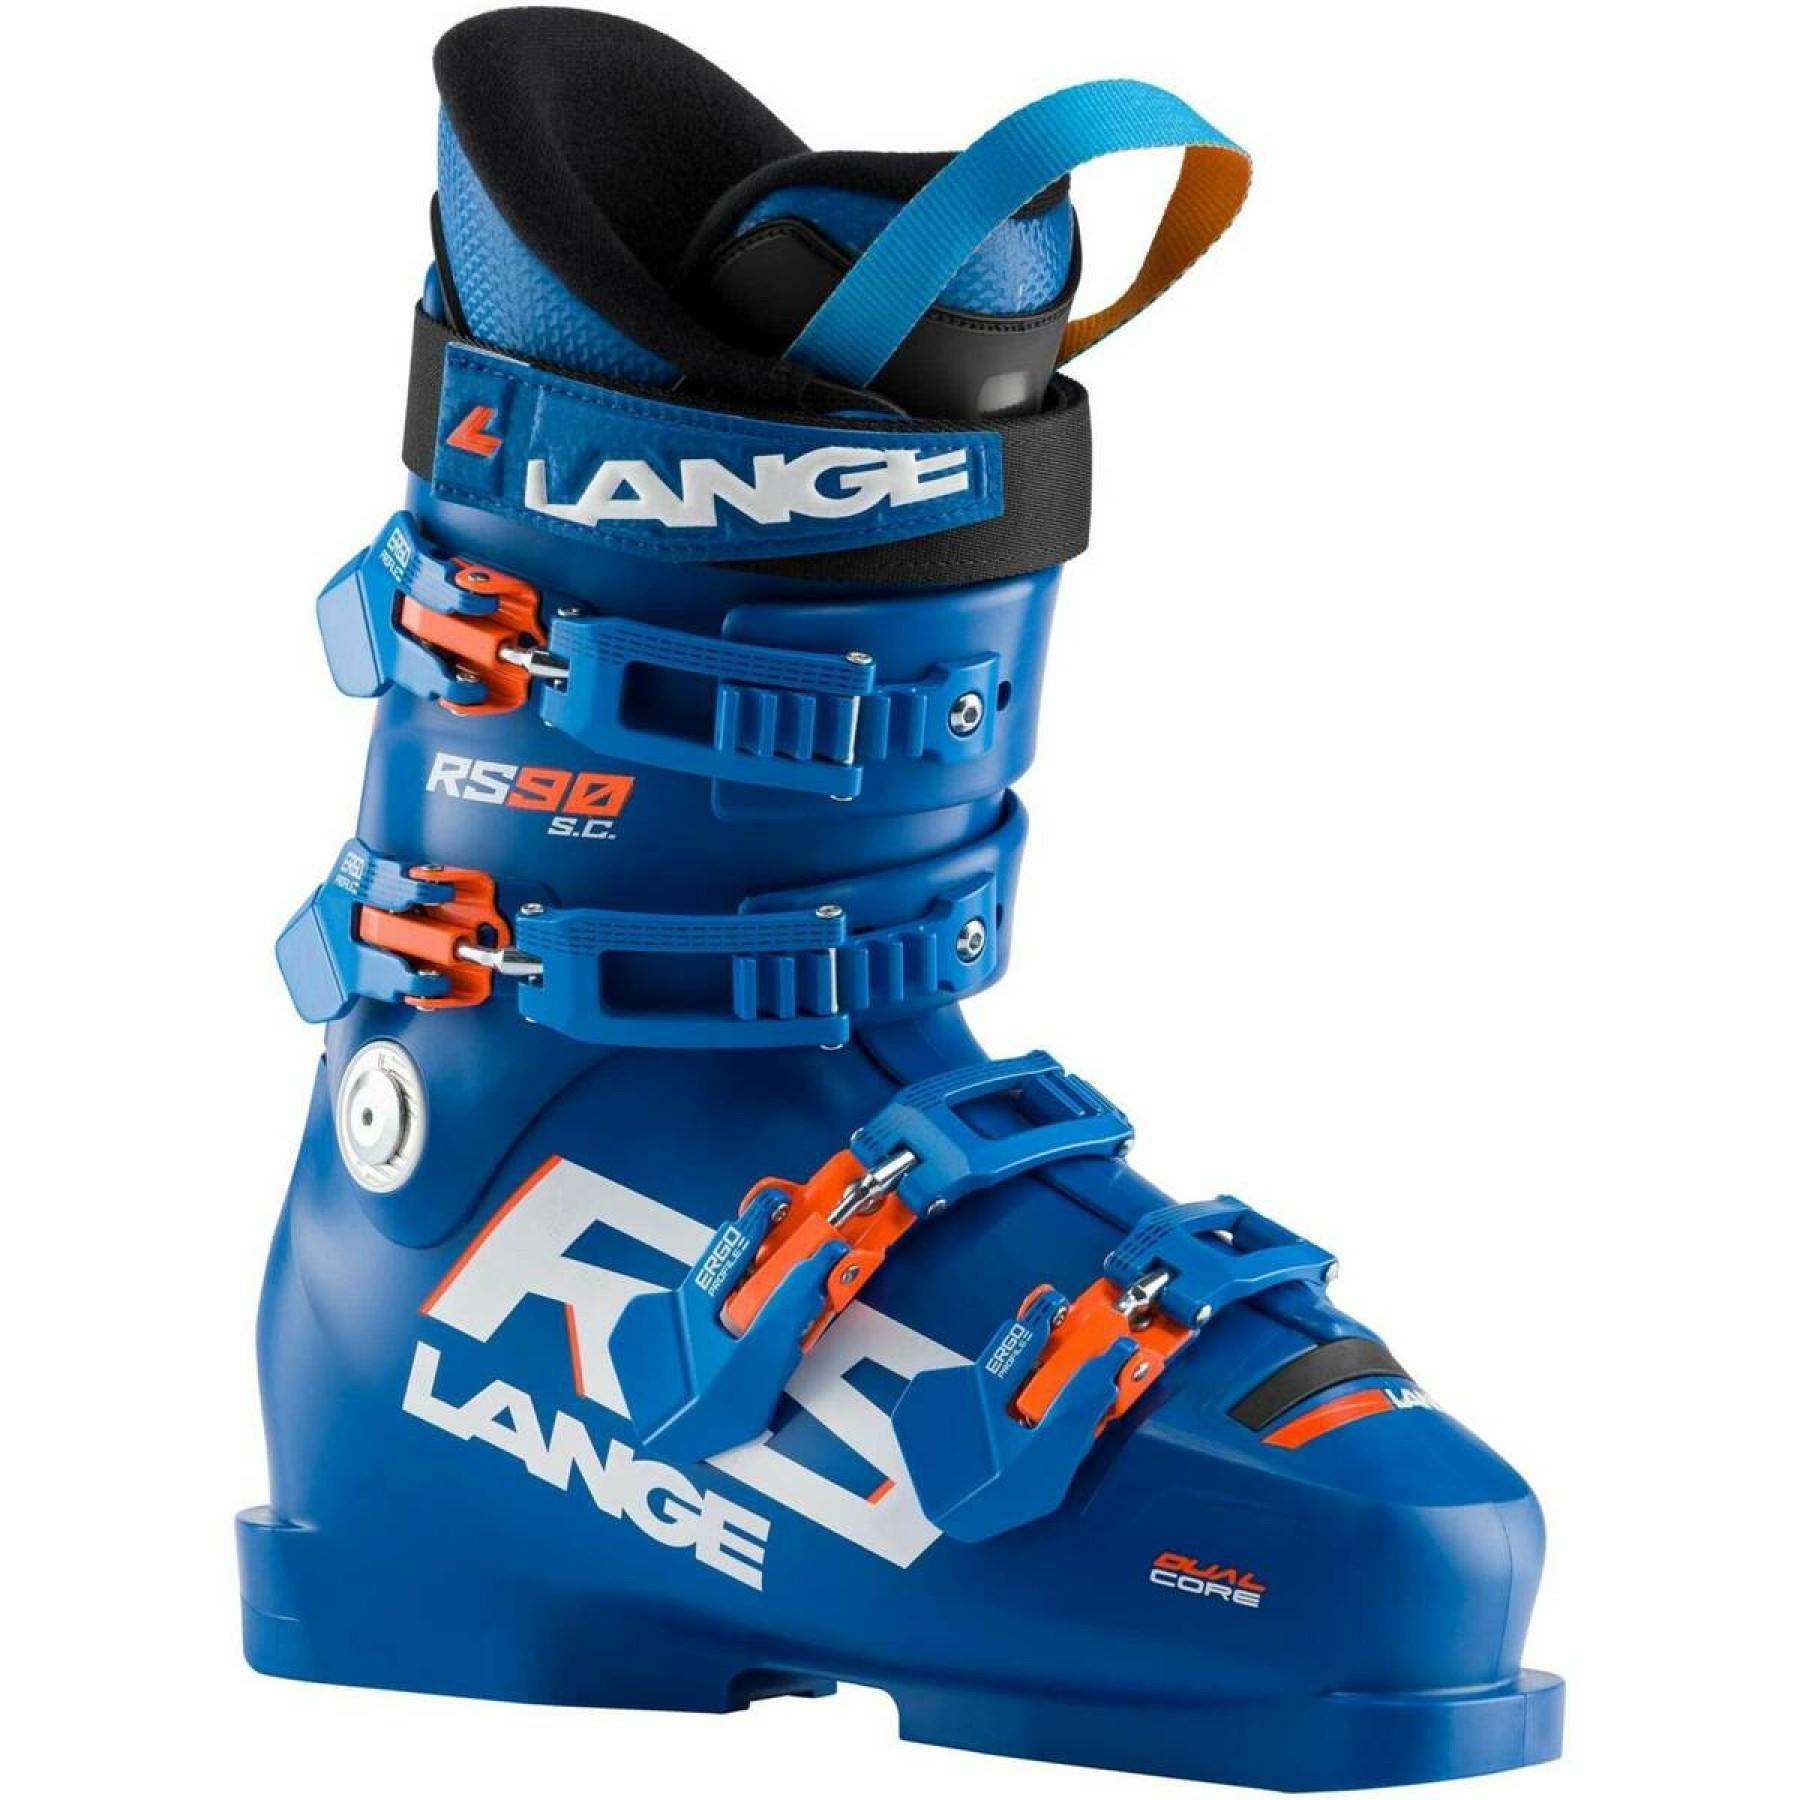 Children's ski boots Lange rs 90 s.c.